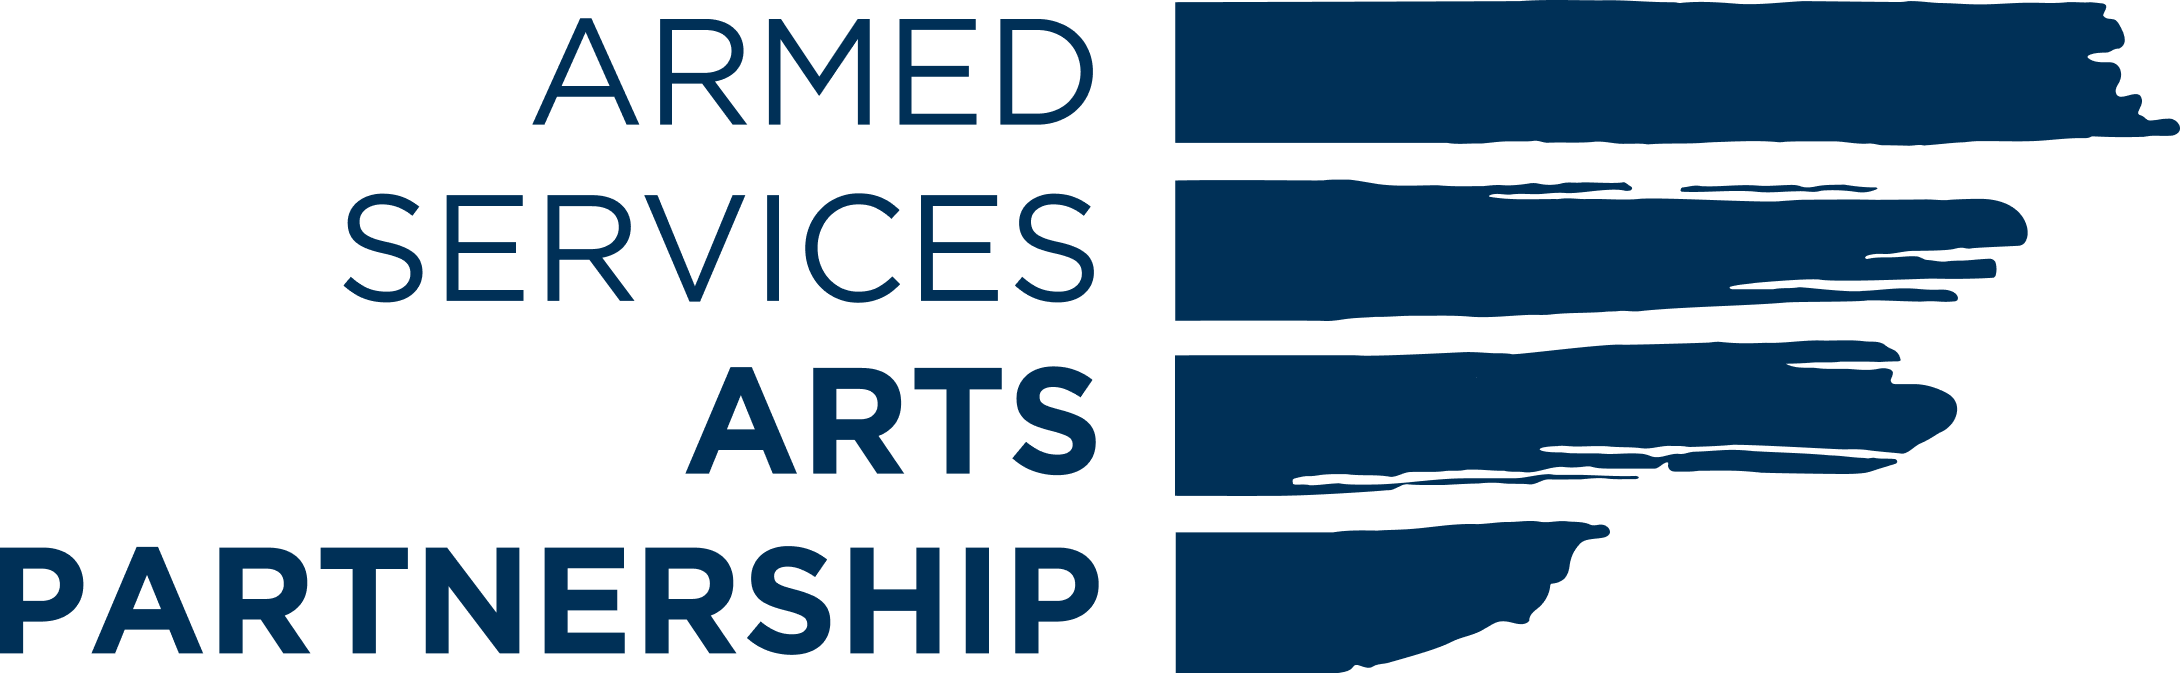 Armed Services Arts Partnership Logo